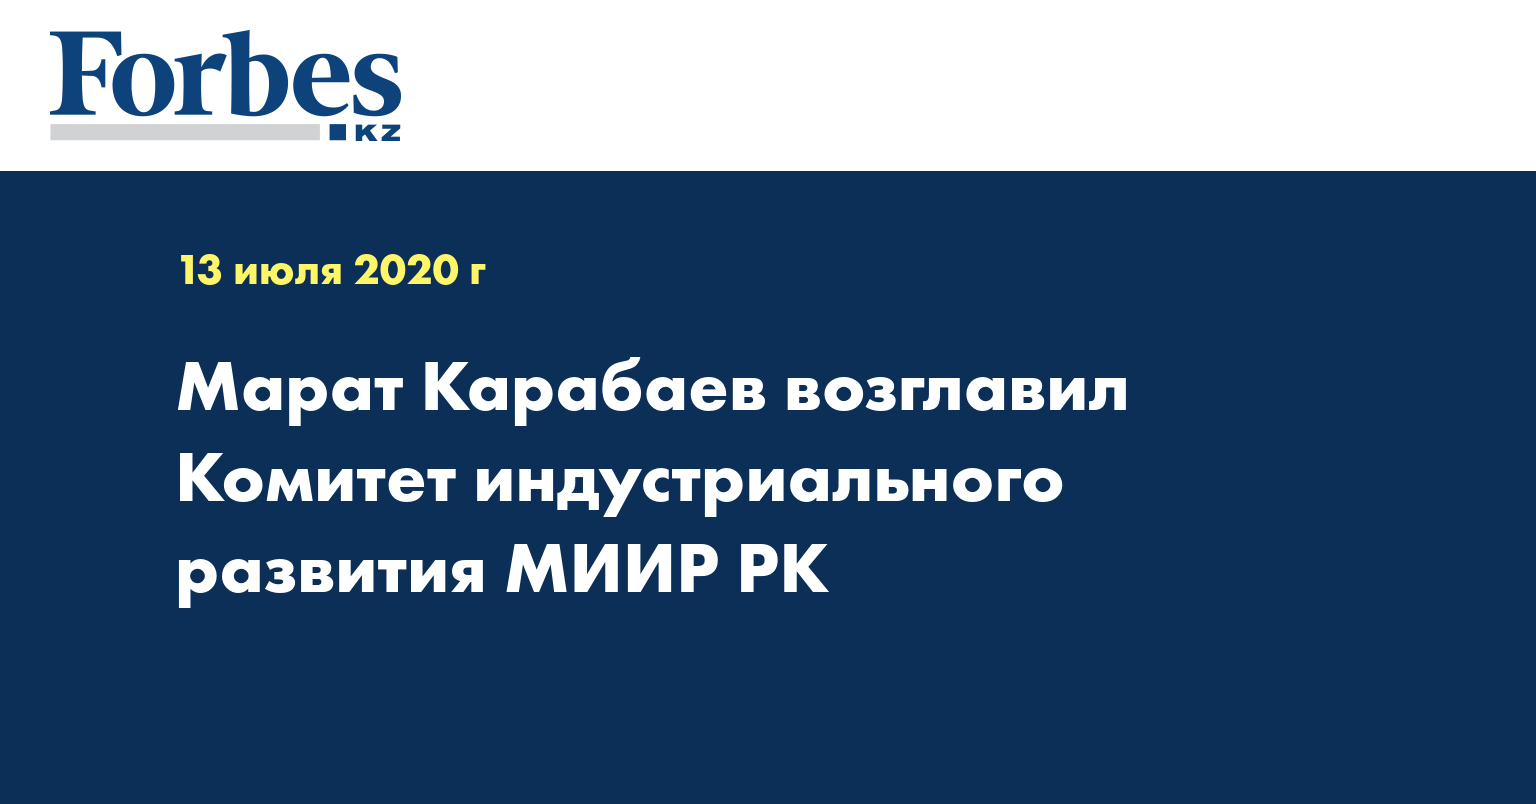 Марат Карабаев возглавил Комитет индустриального развития МИИР РК